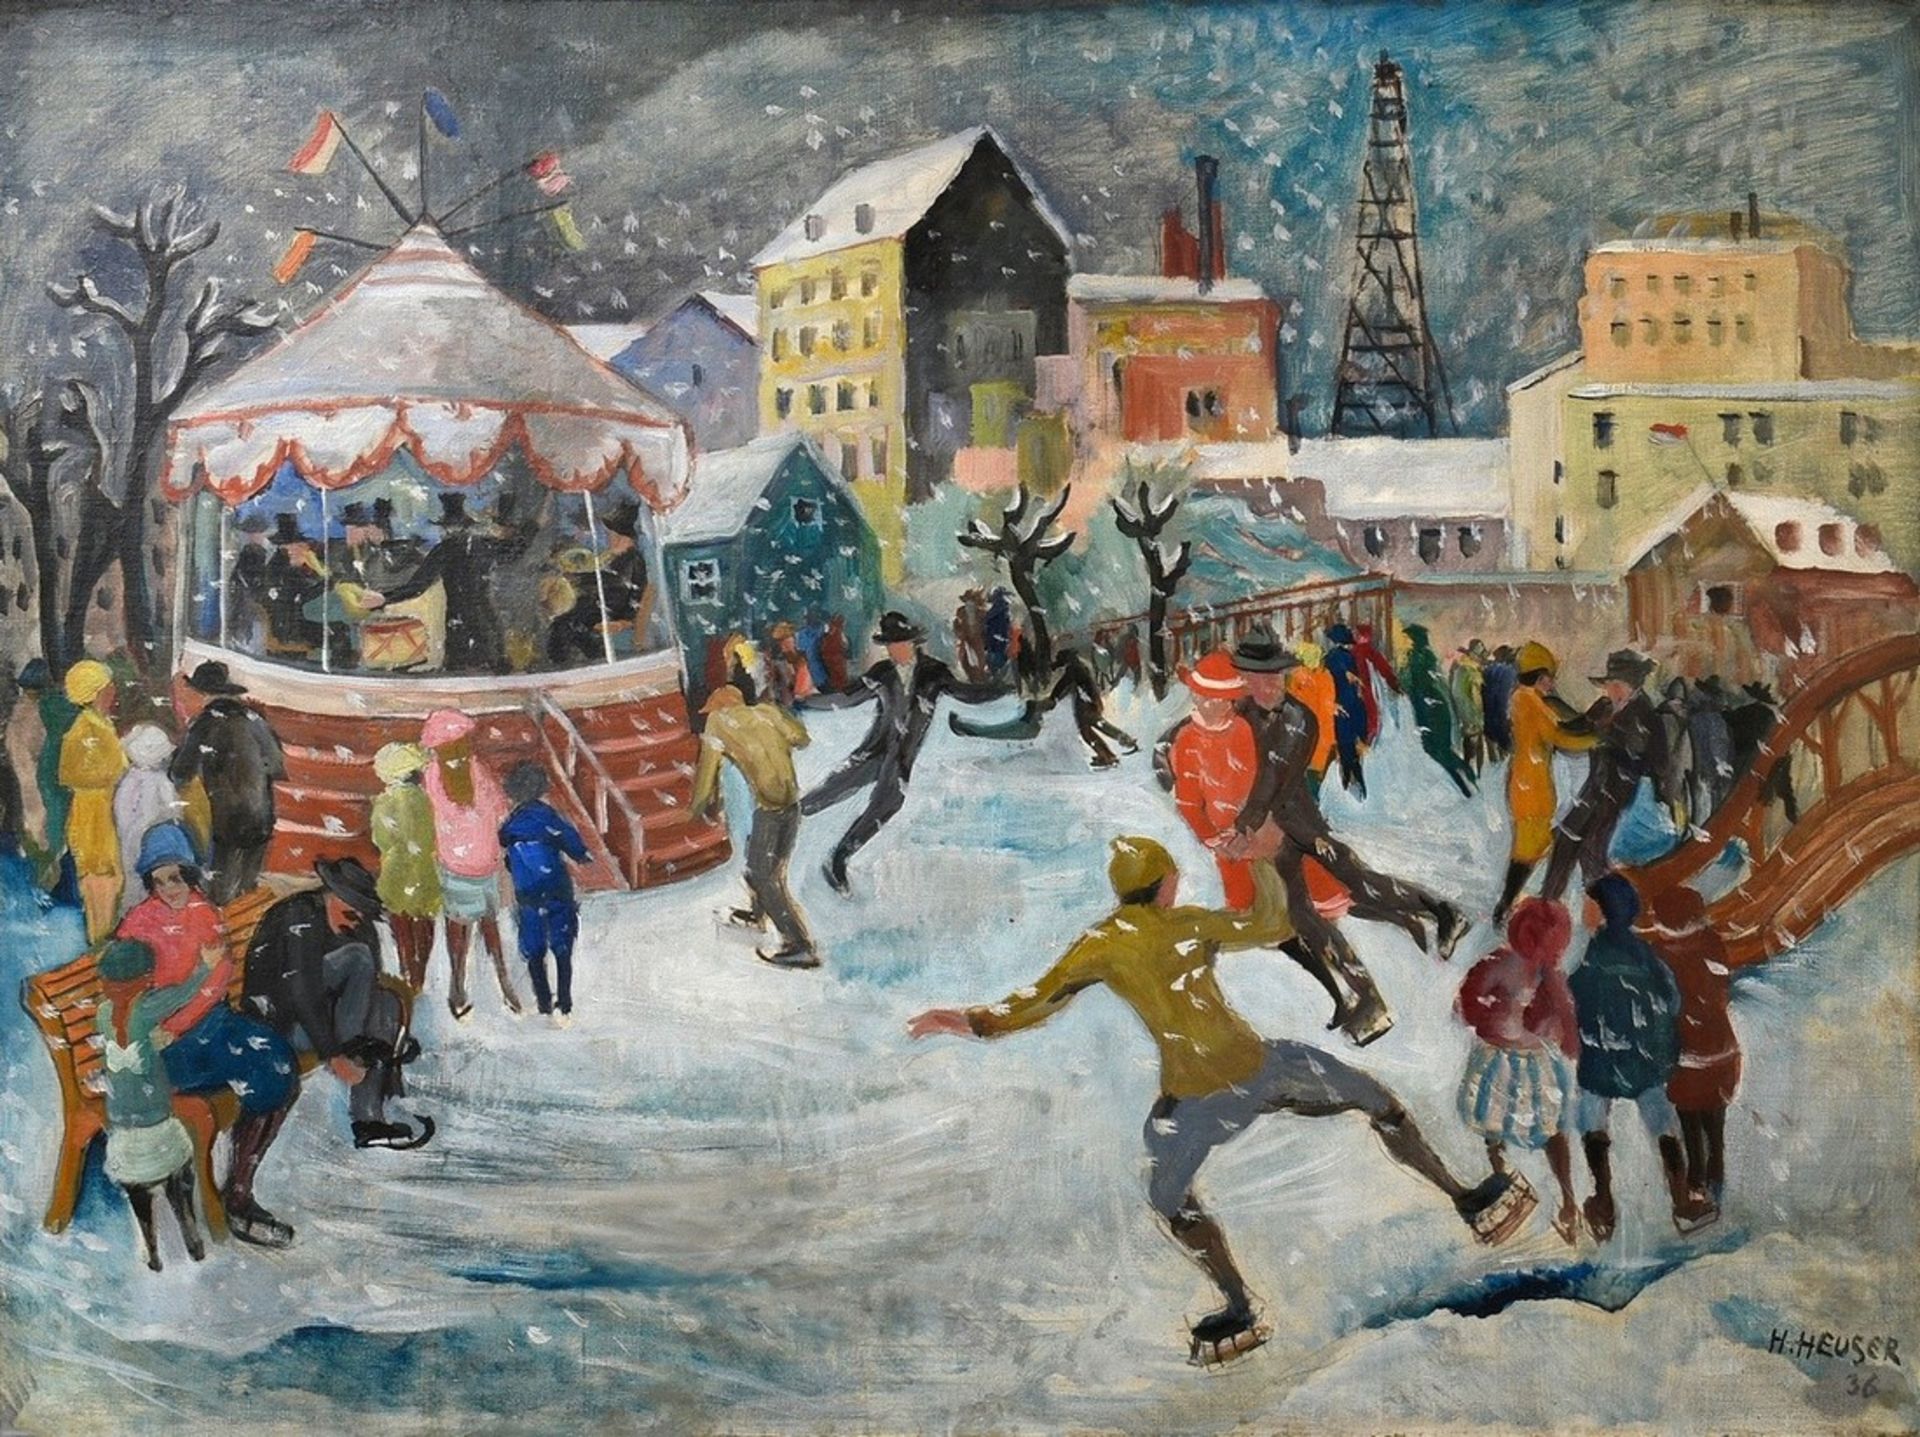 Heuser, Heinrich (1887-1967) "Wintervergnügen" 1936, oil/canvas, b.r. sign./dat., verso adhesive la